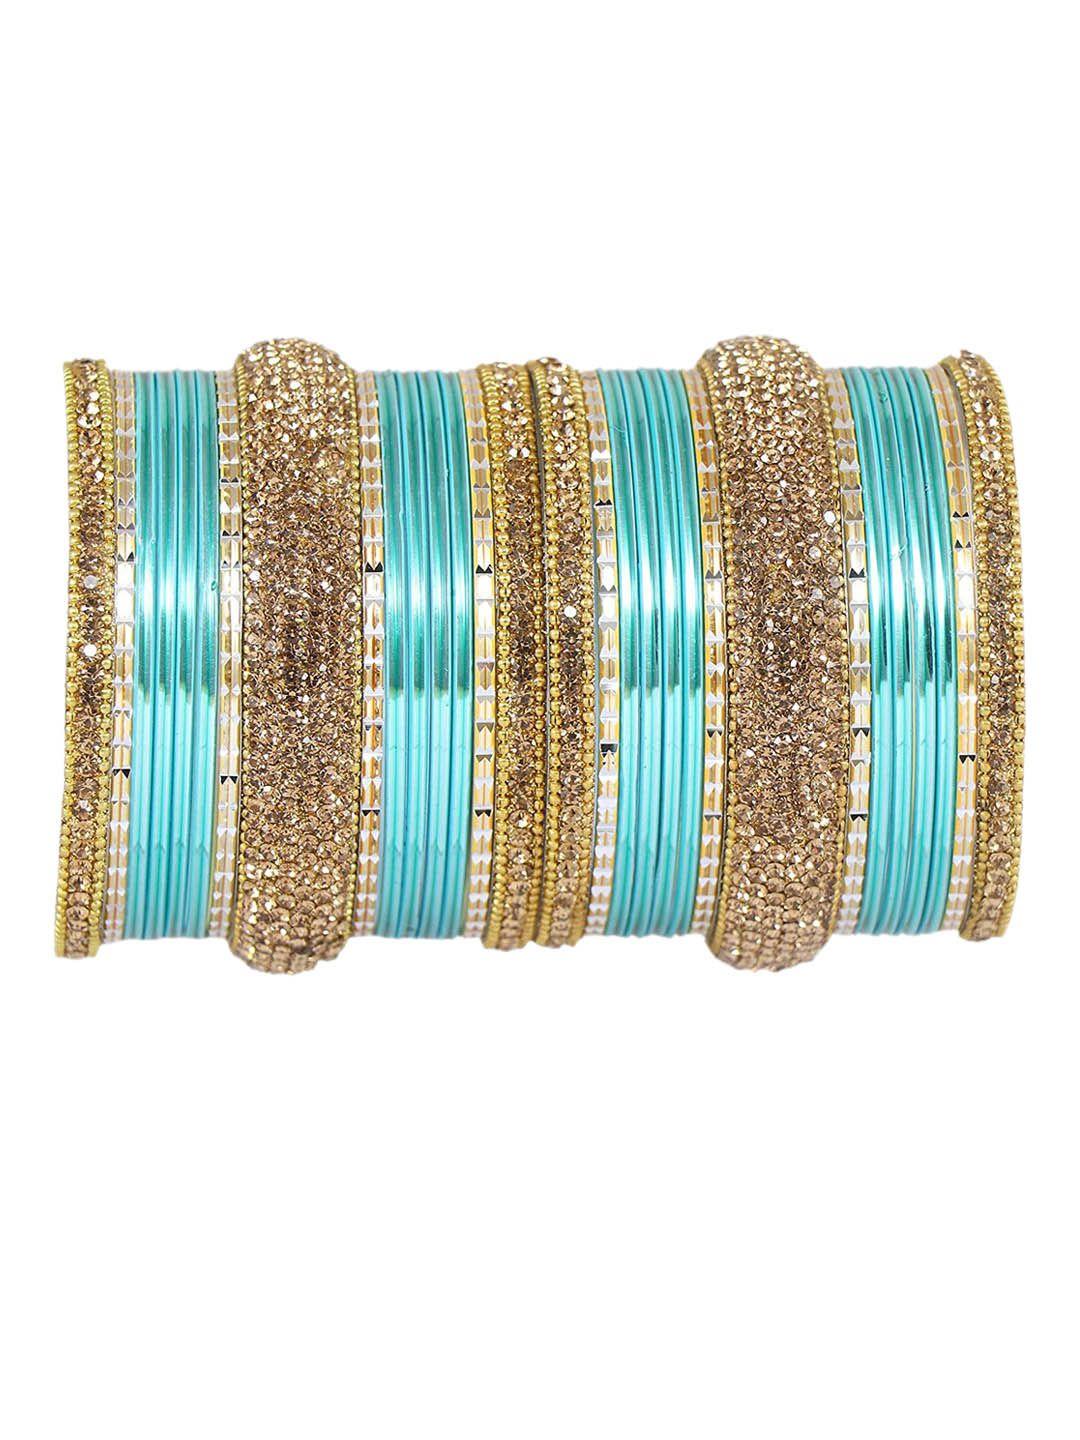 nmii set of 30 cz-studded bangles